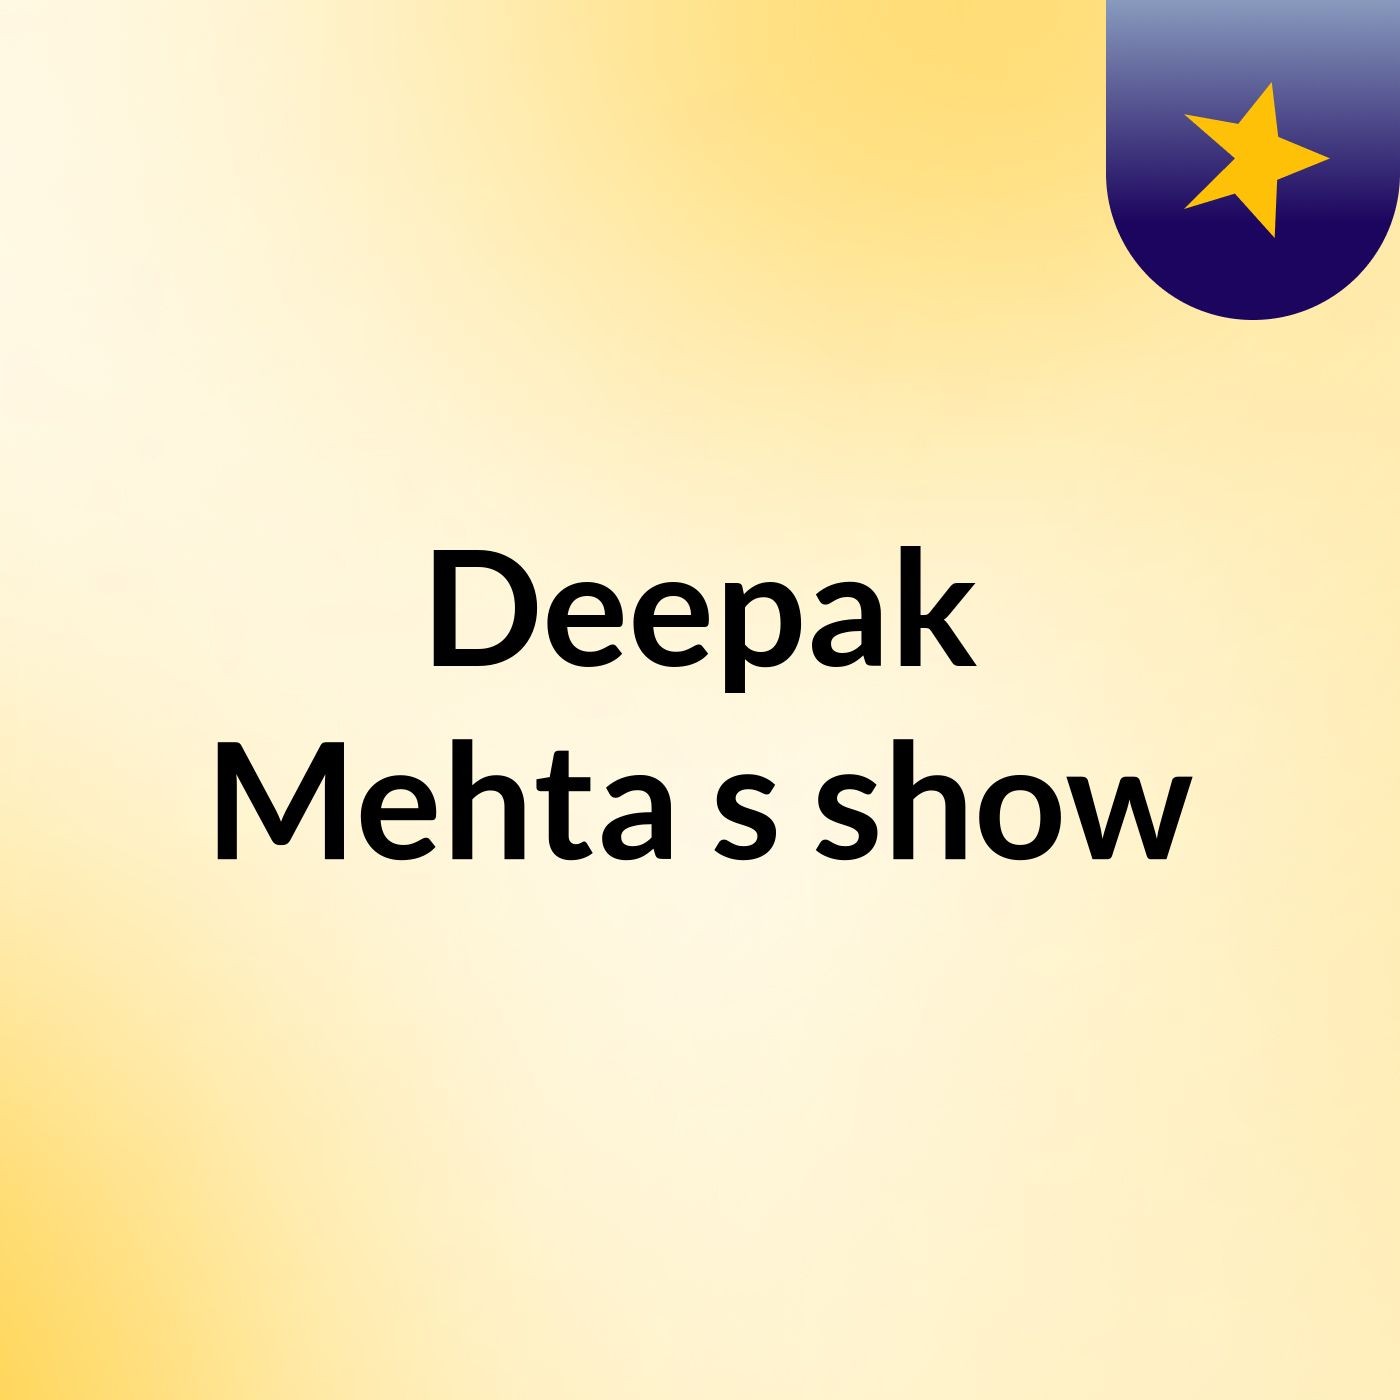 Deepak Mehta's show